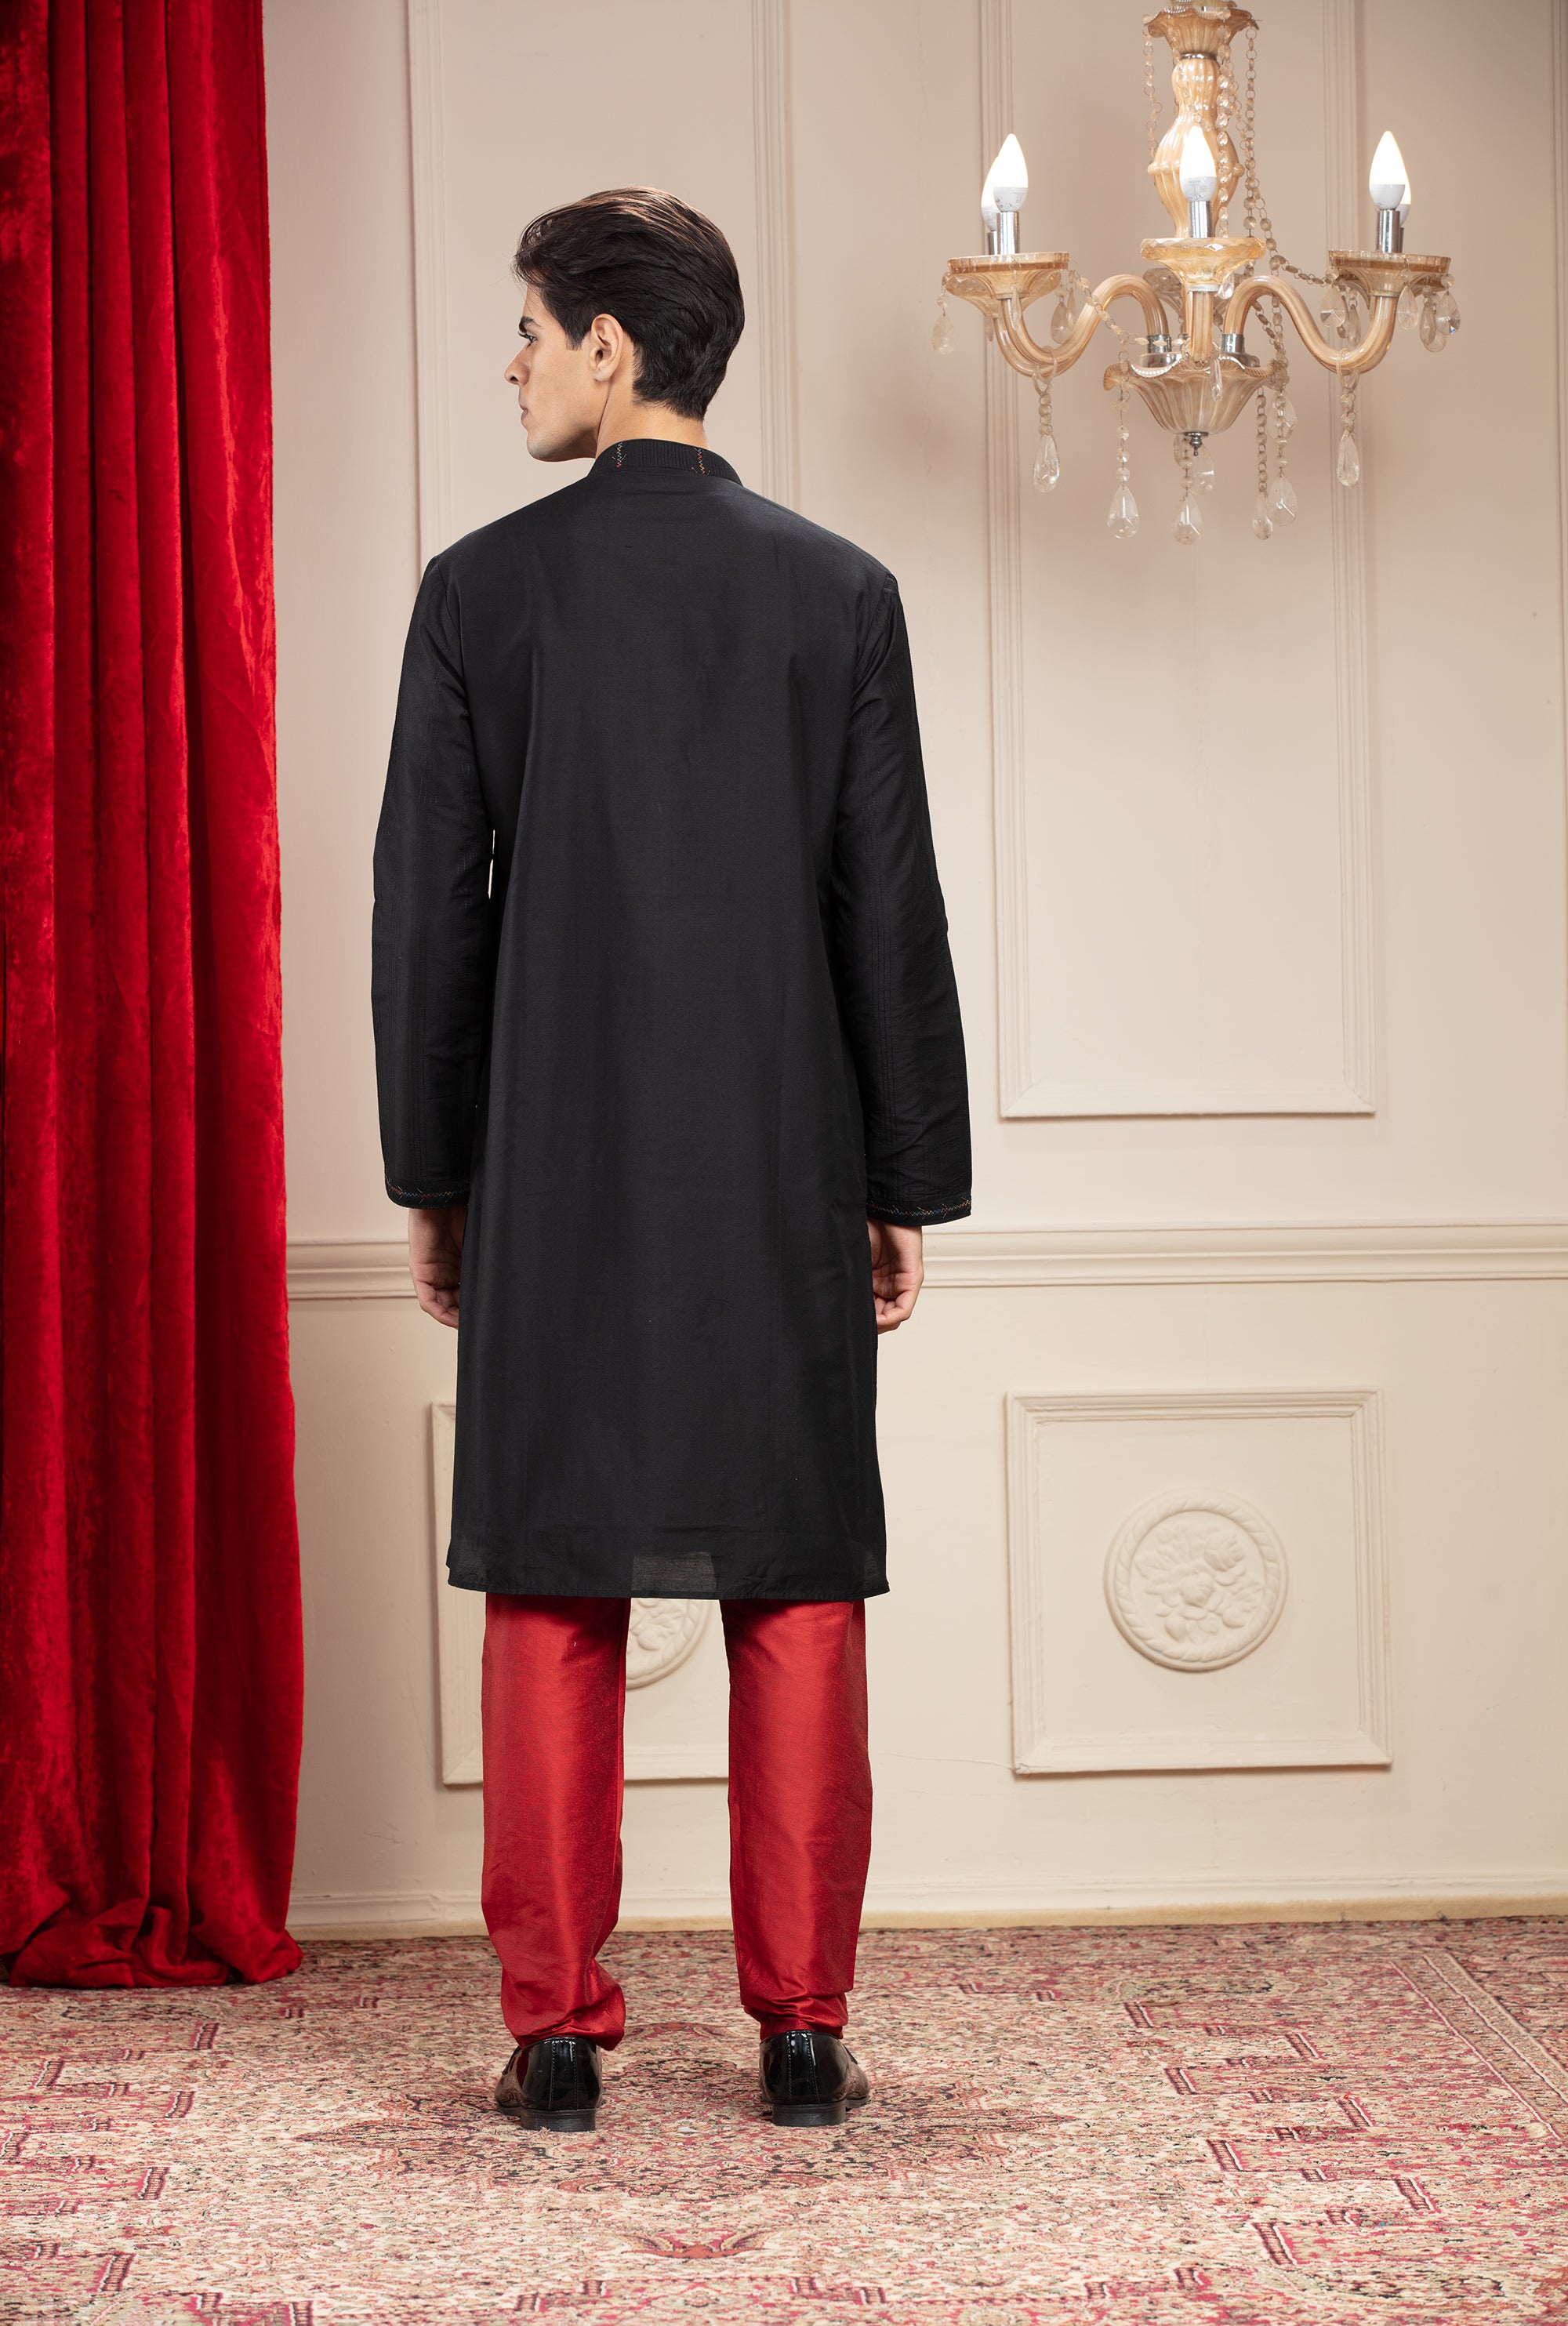 Black Full sleeves Kurta with Thread work & Red pajama